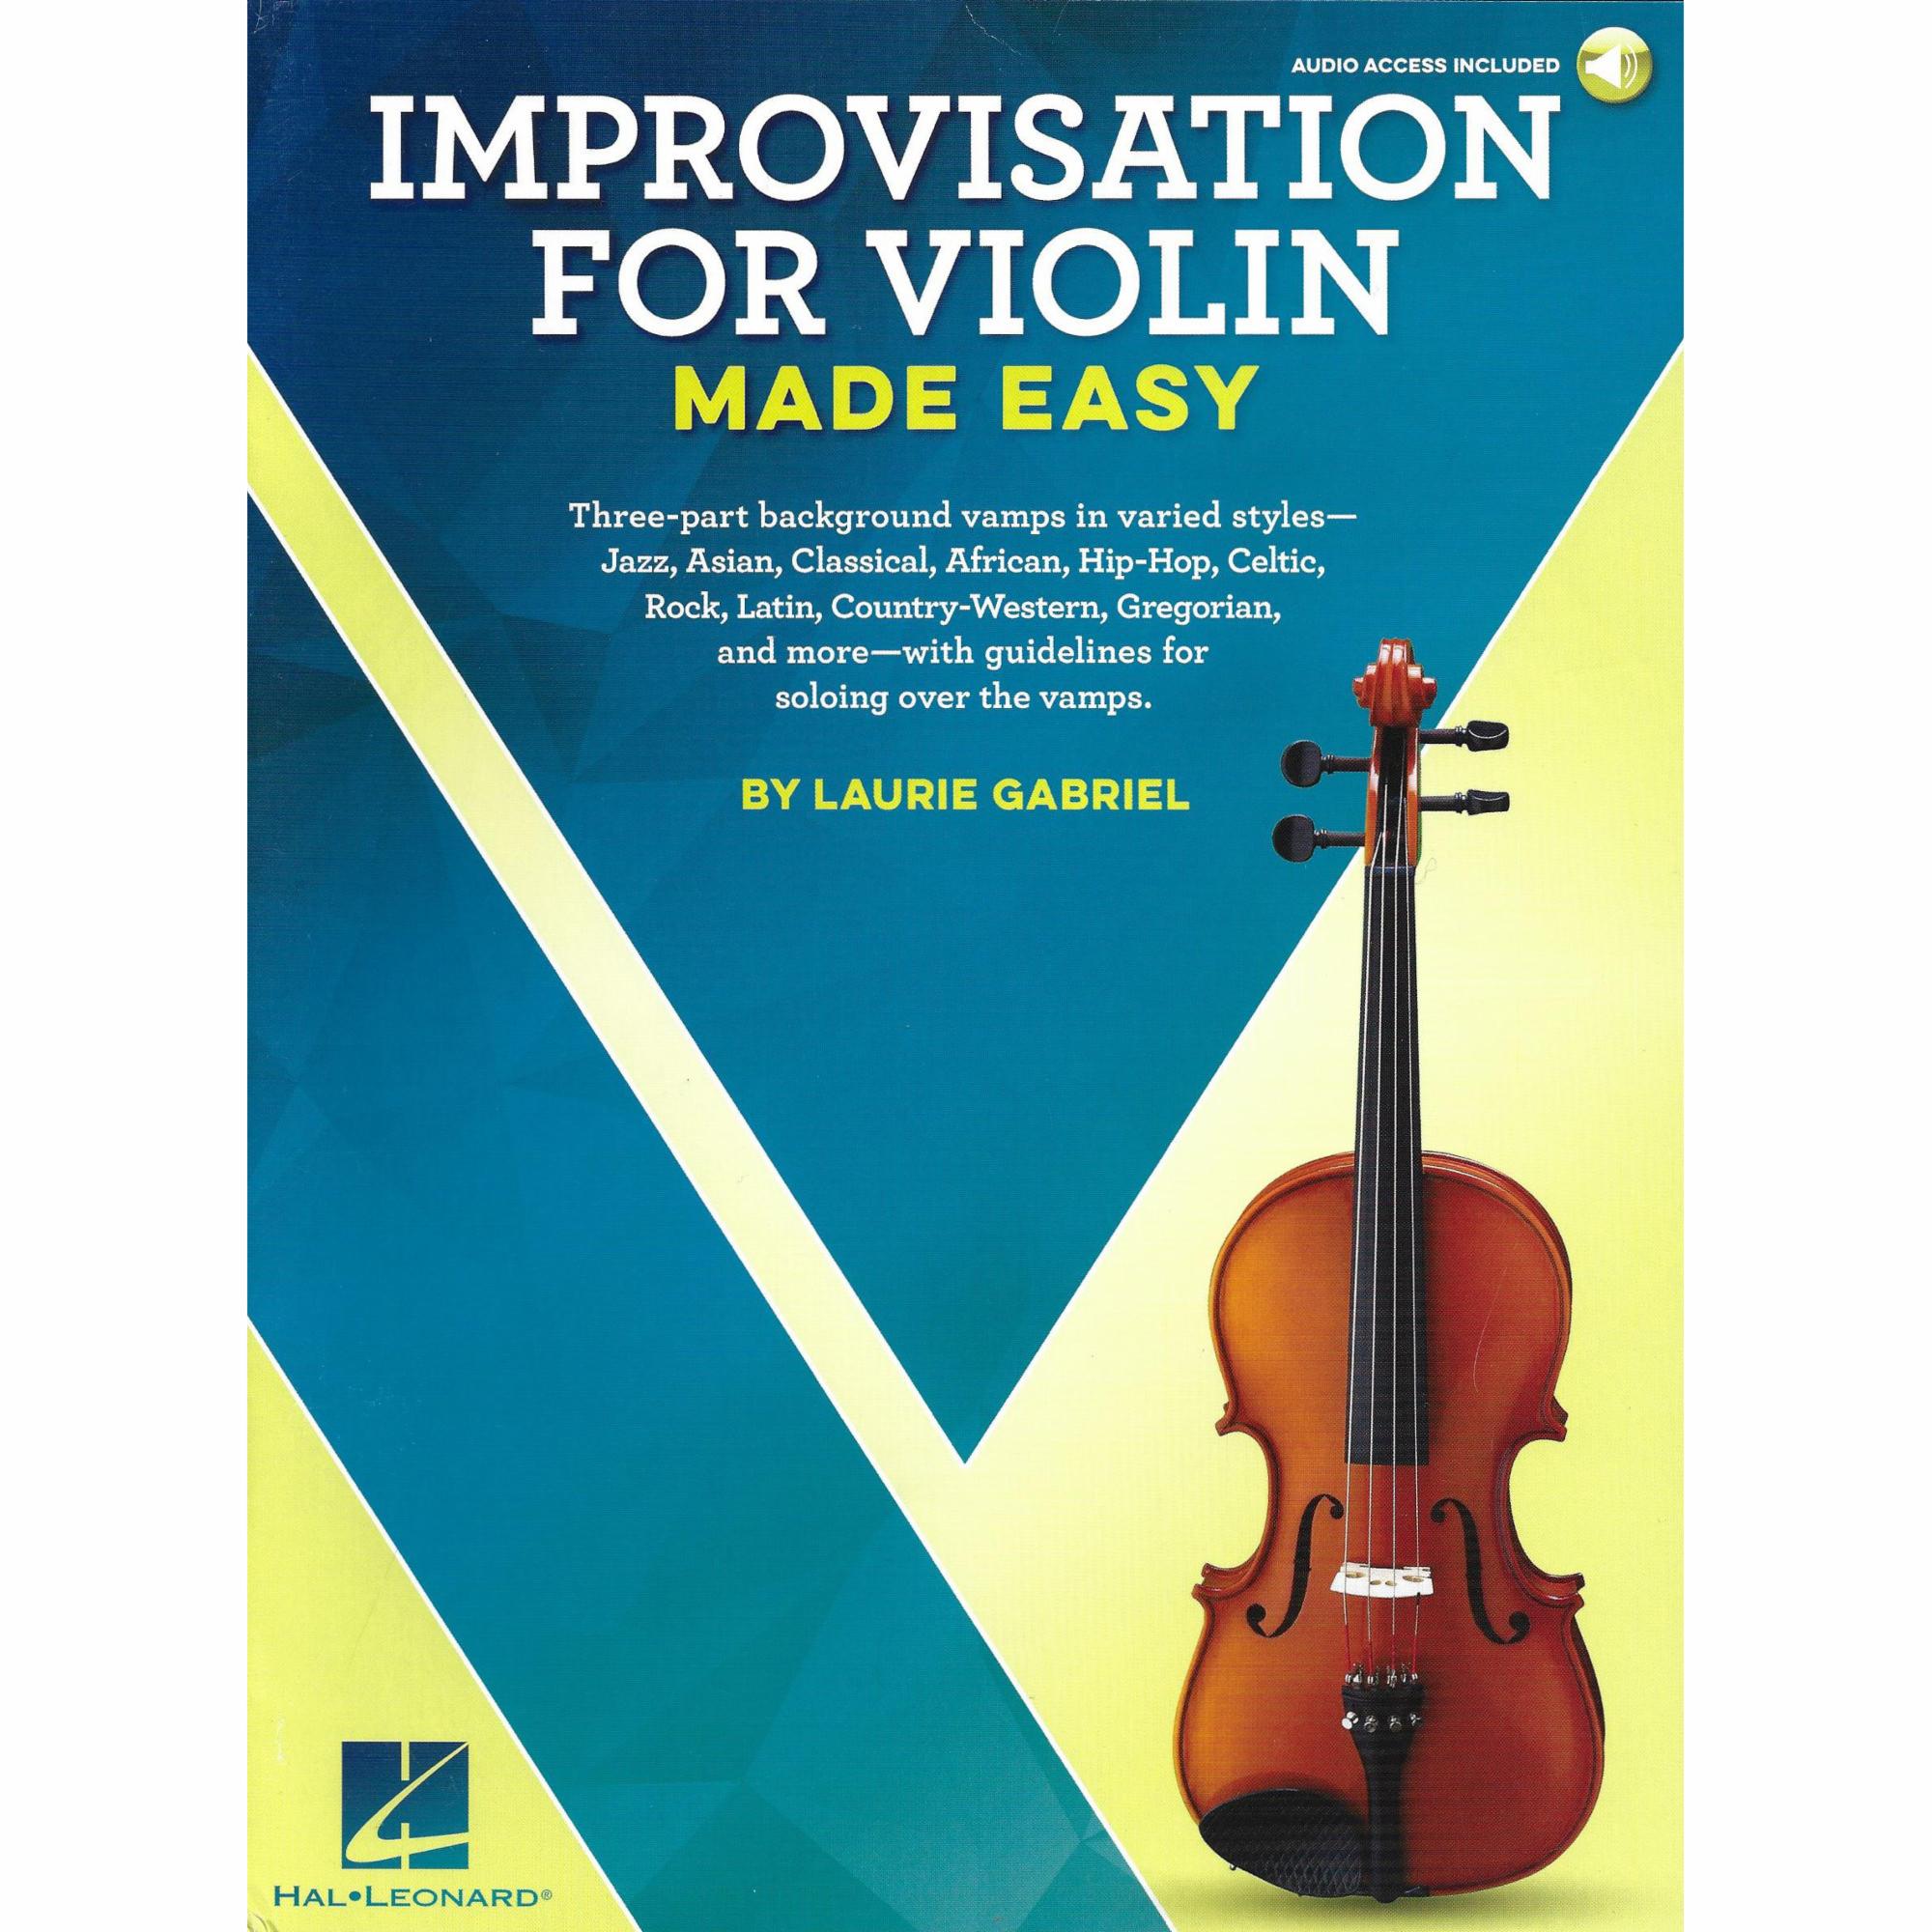 Improvisation Made Easy for Violin, Viola, Cello, or Bass